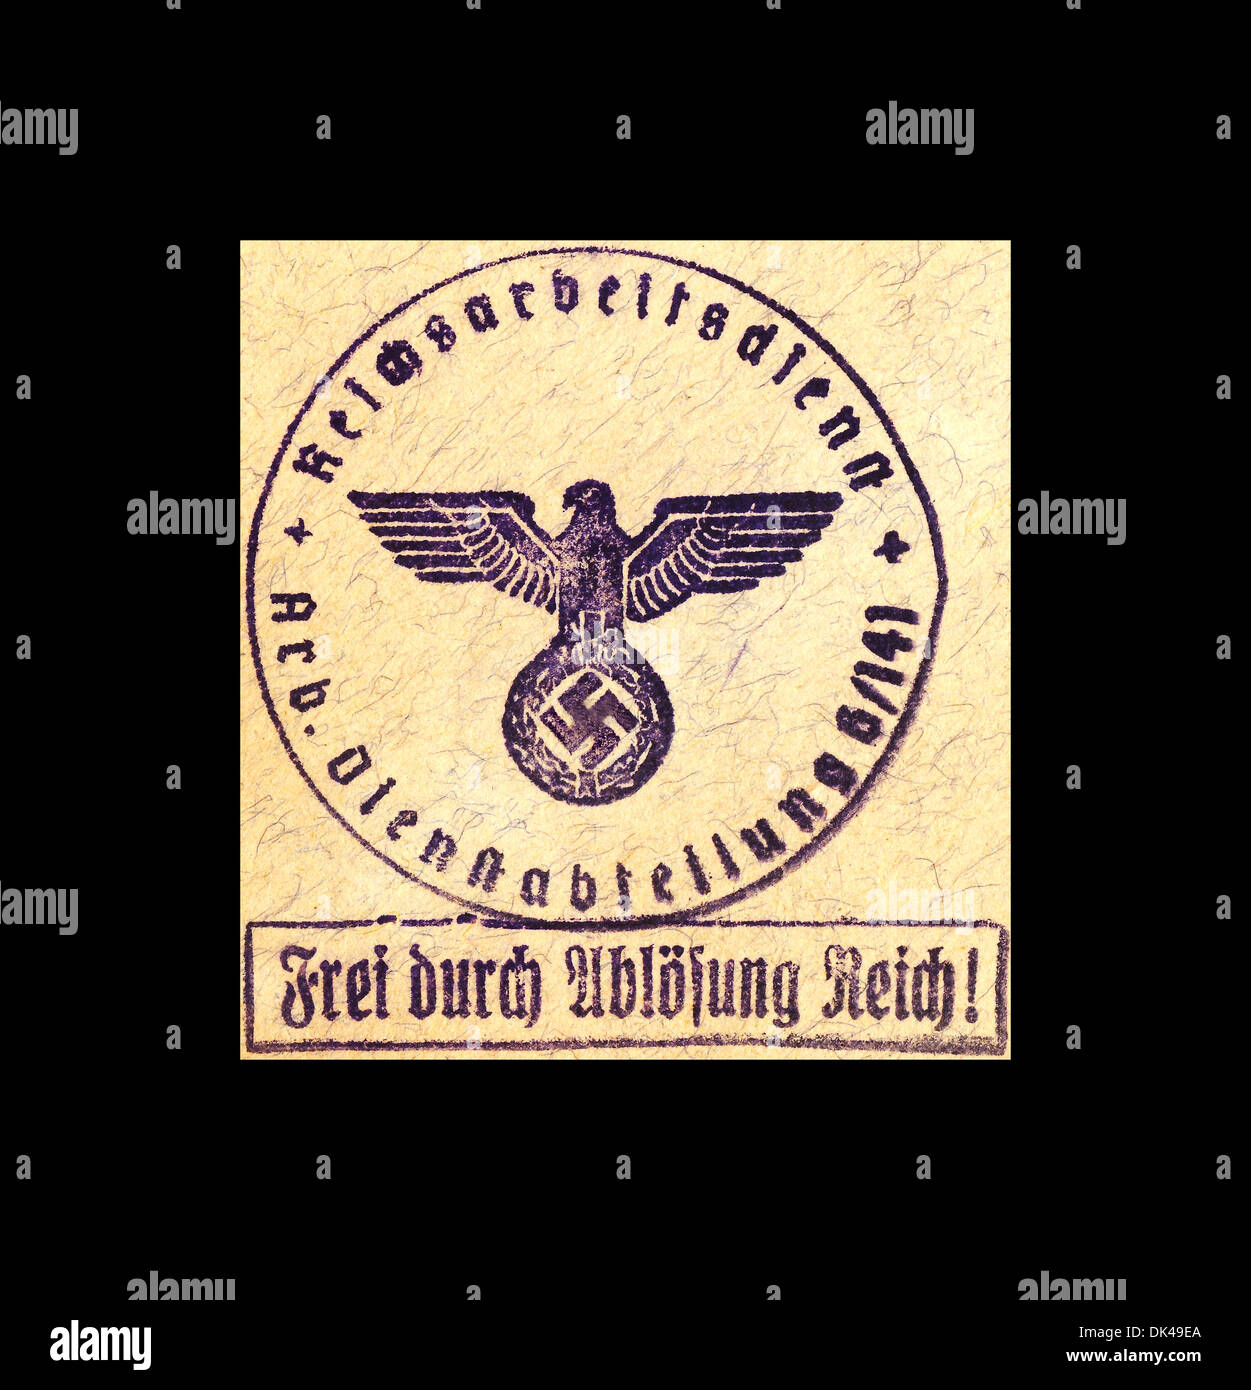 1941 WW2 Official Nazi Party Workers stamp & swastika symbol  ‘Frei durch ablösung Reich’ 'Free through Reich redemption'   Germany World War II 2F9G3 Stock Photo